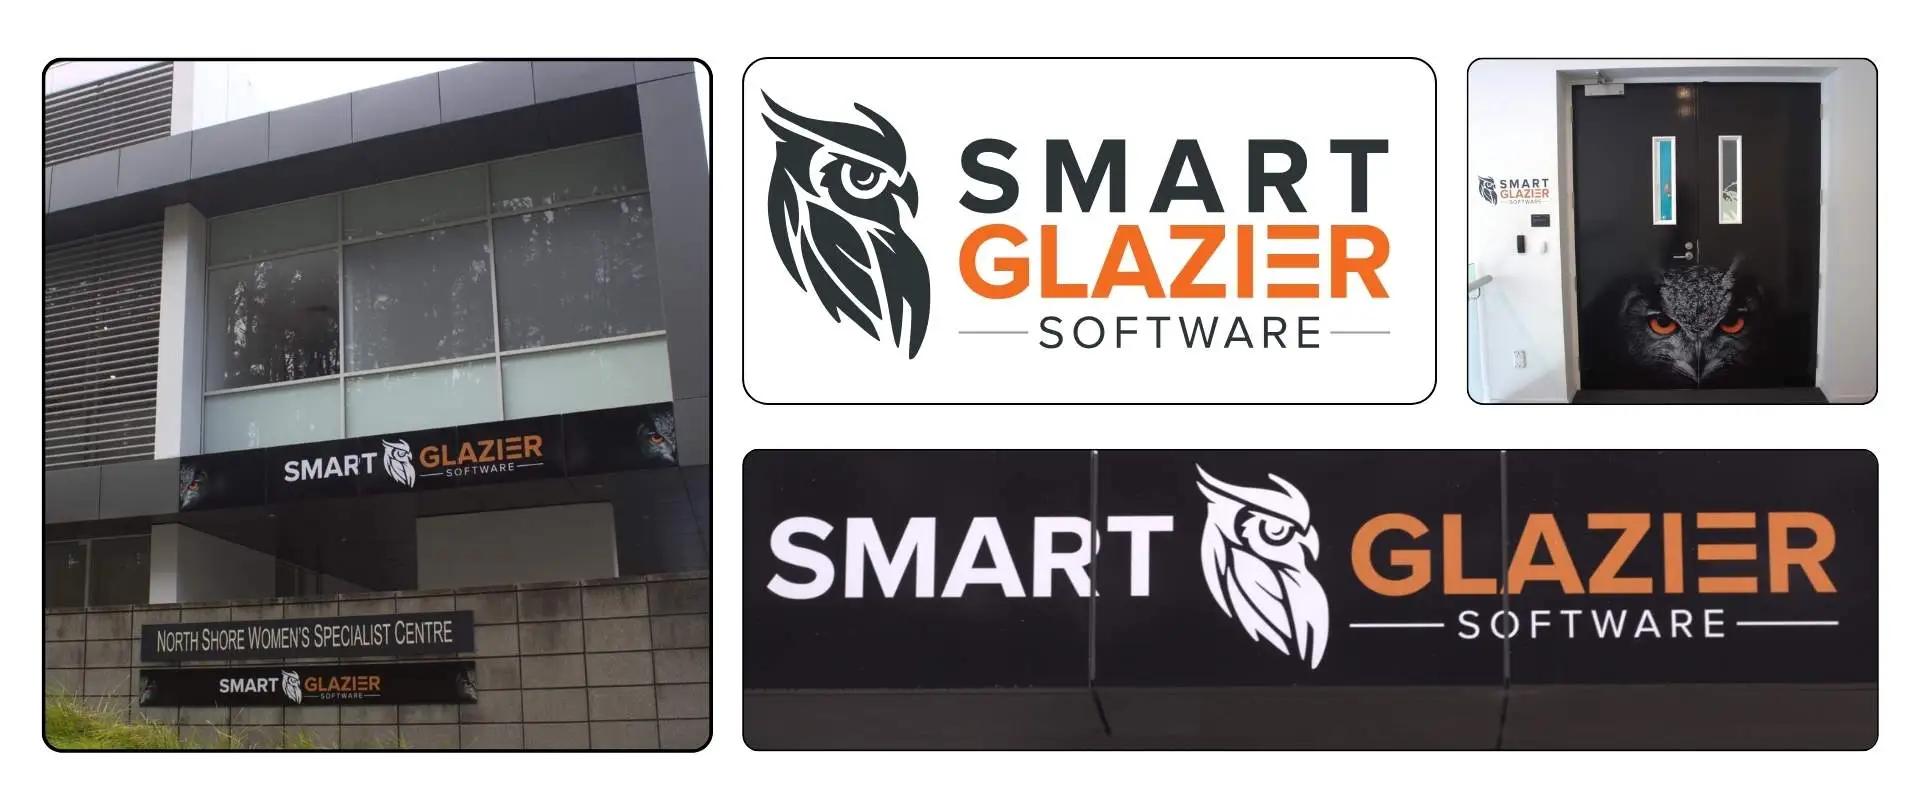 Smart Glazier Software branding